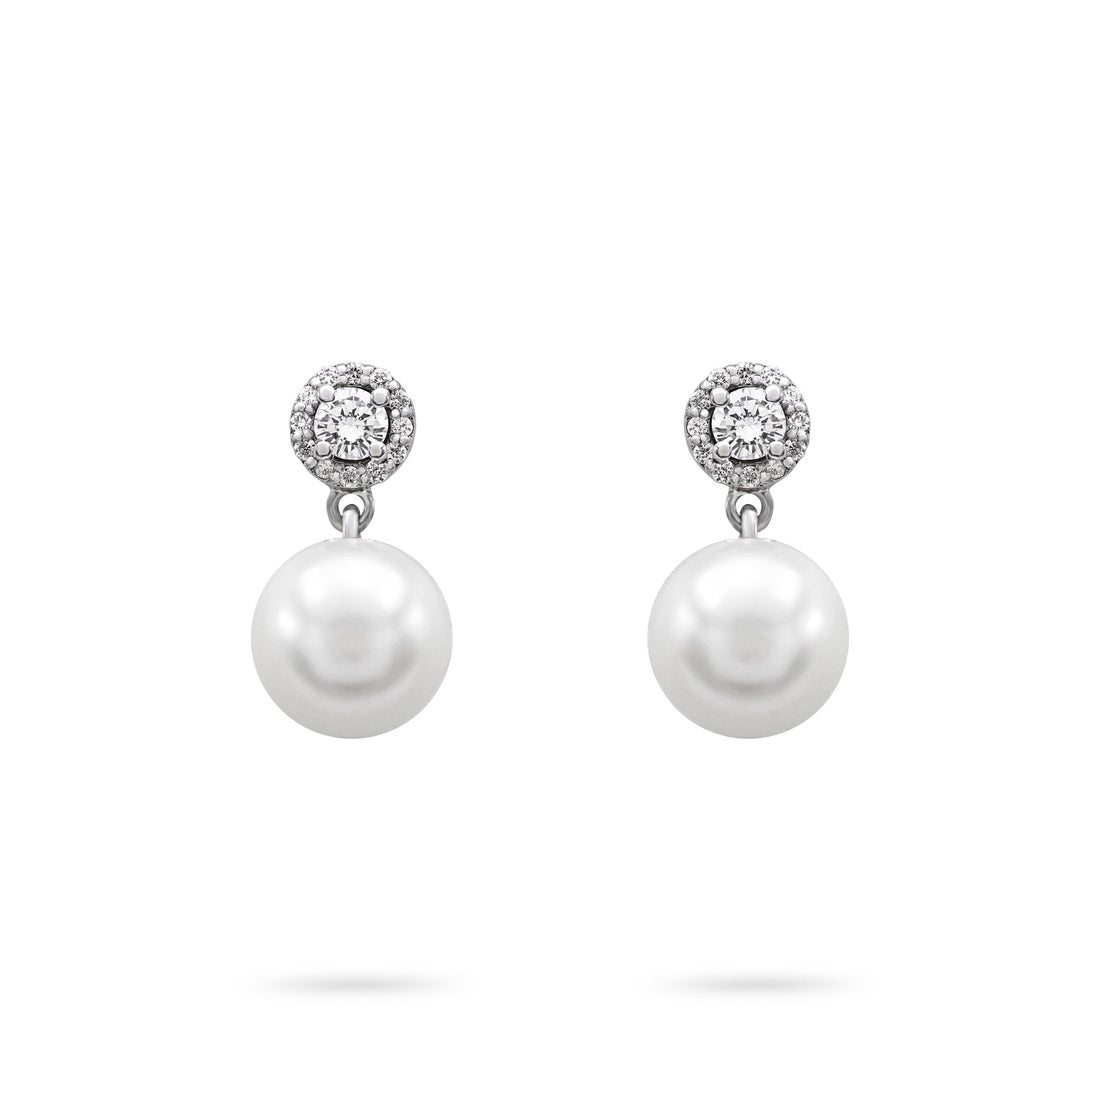 Jewelry Pearls | Diamond Earrings | 0.35 Cts. | 14K Gold - White / Pair / Round Cut - earring Zengoda Shop online